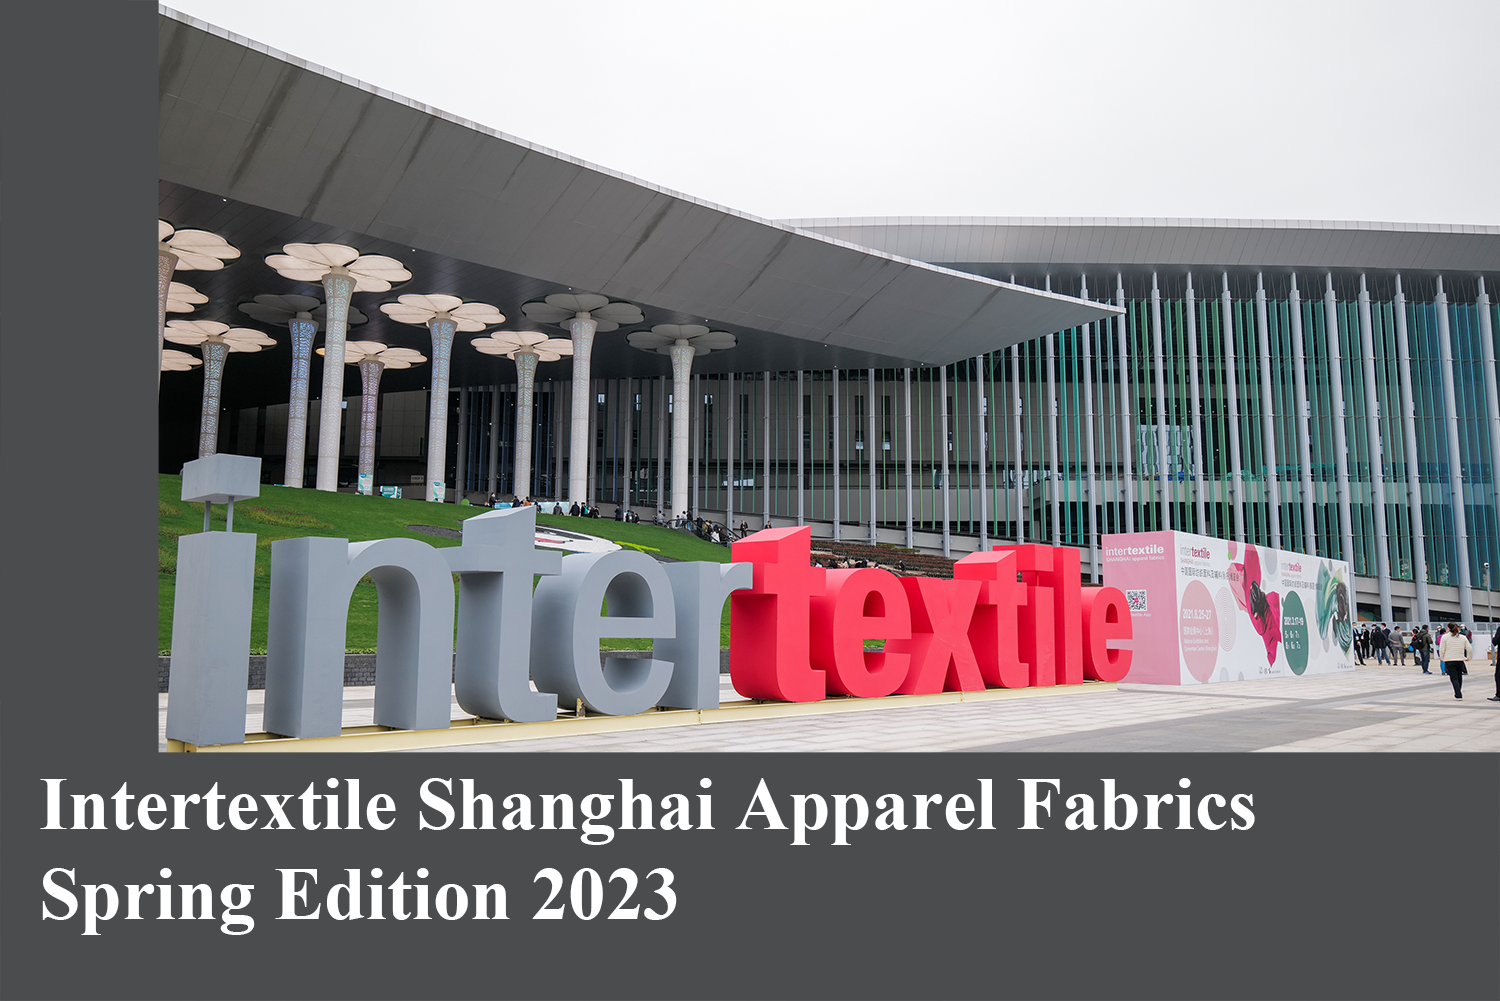 The Analysis of Intertextile Shanghai Apparel Fabrics Spring Edition